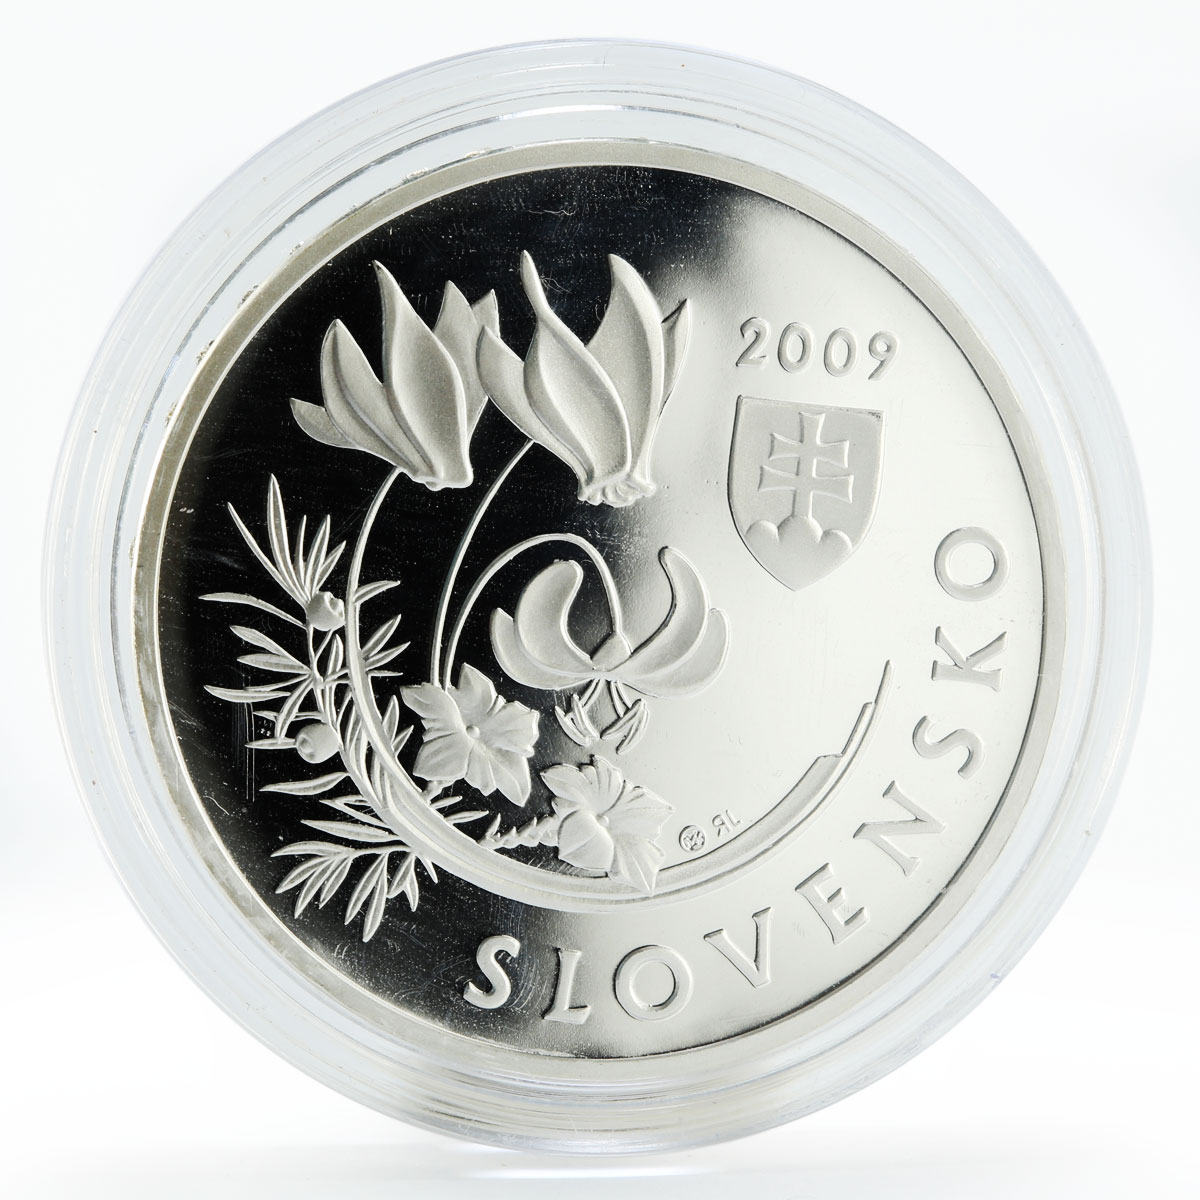 Slovakia 20 euro Velka Fatra National Park silver coin 2009